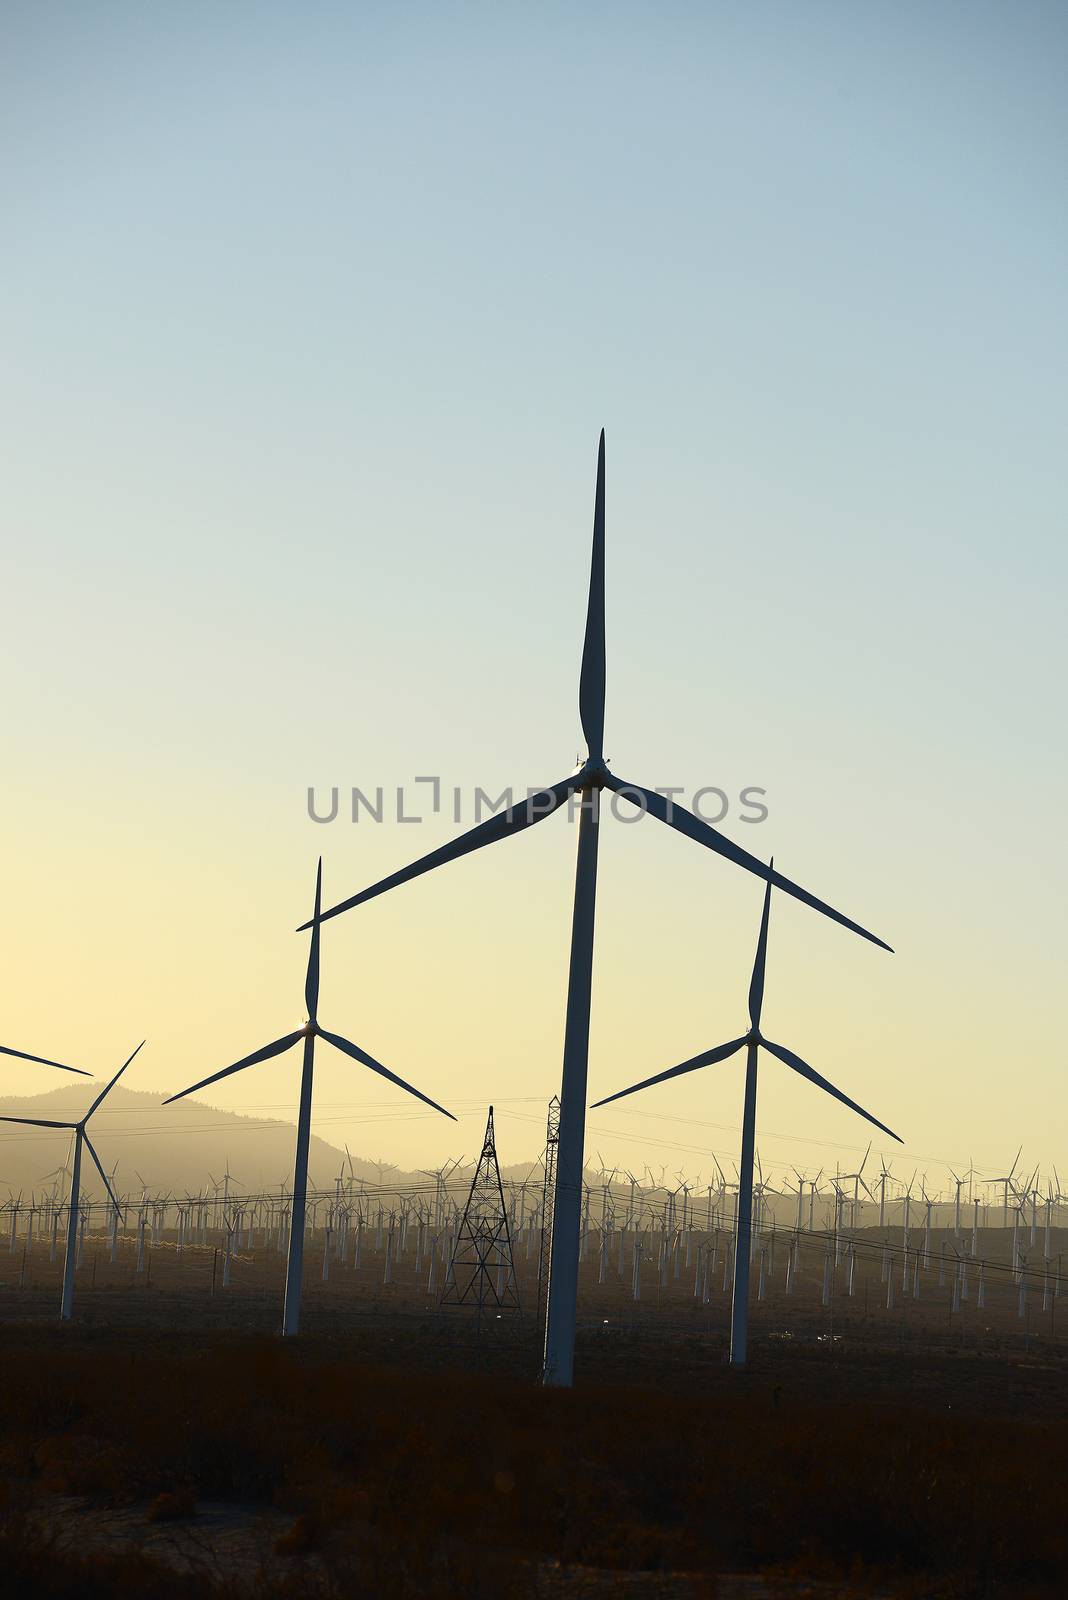 wind mill farm in california desert